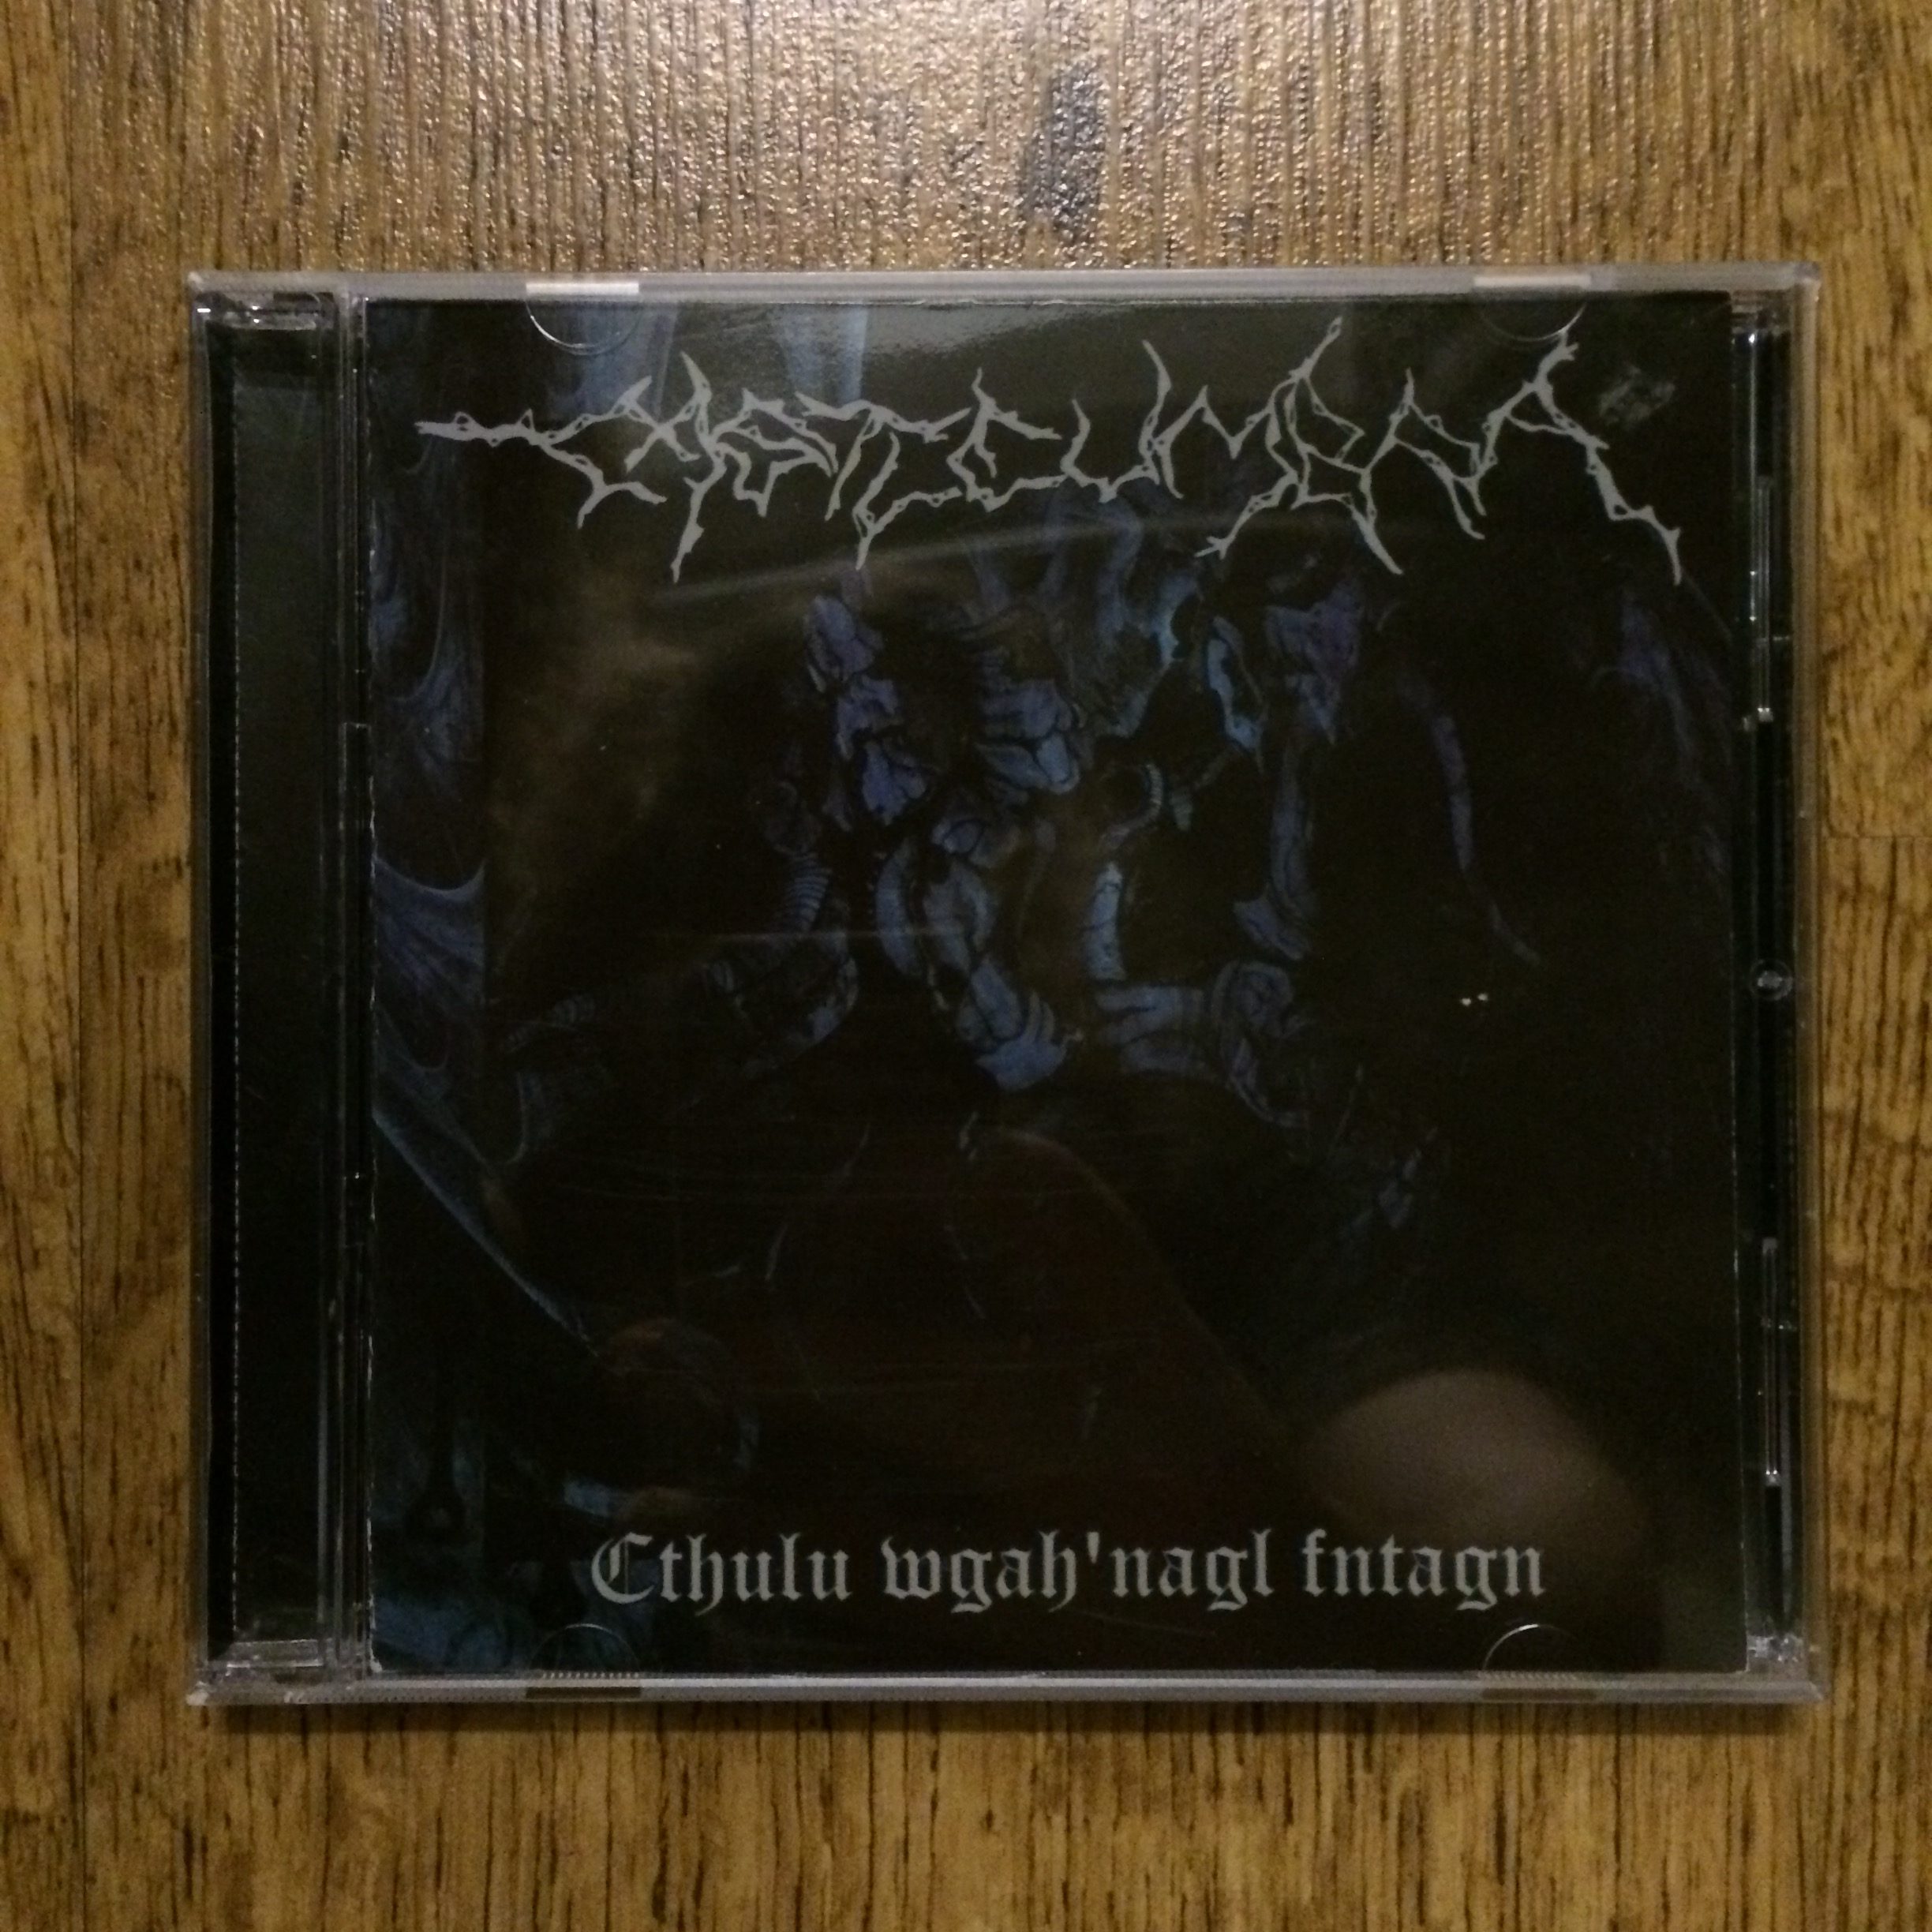 Photo of the Castleumbra - "Cthulu Wgah'nagl Fntagn" CD